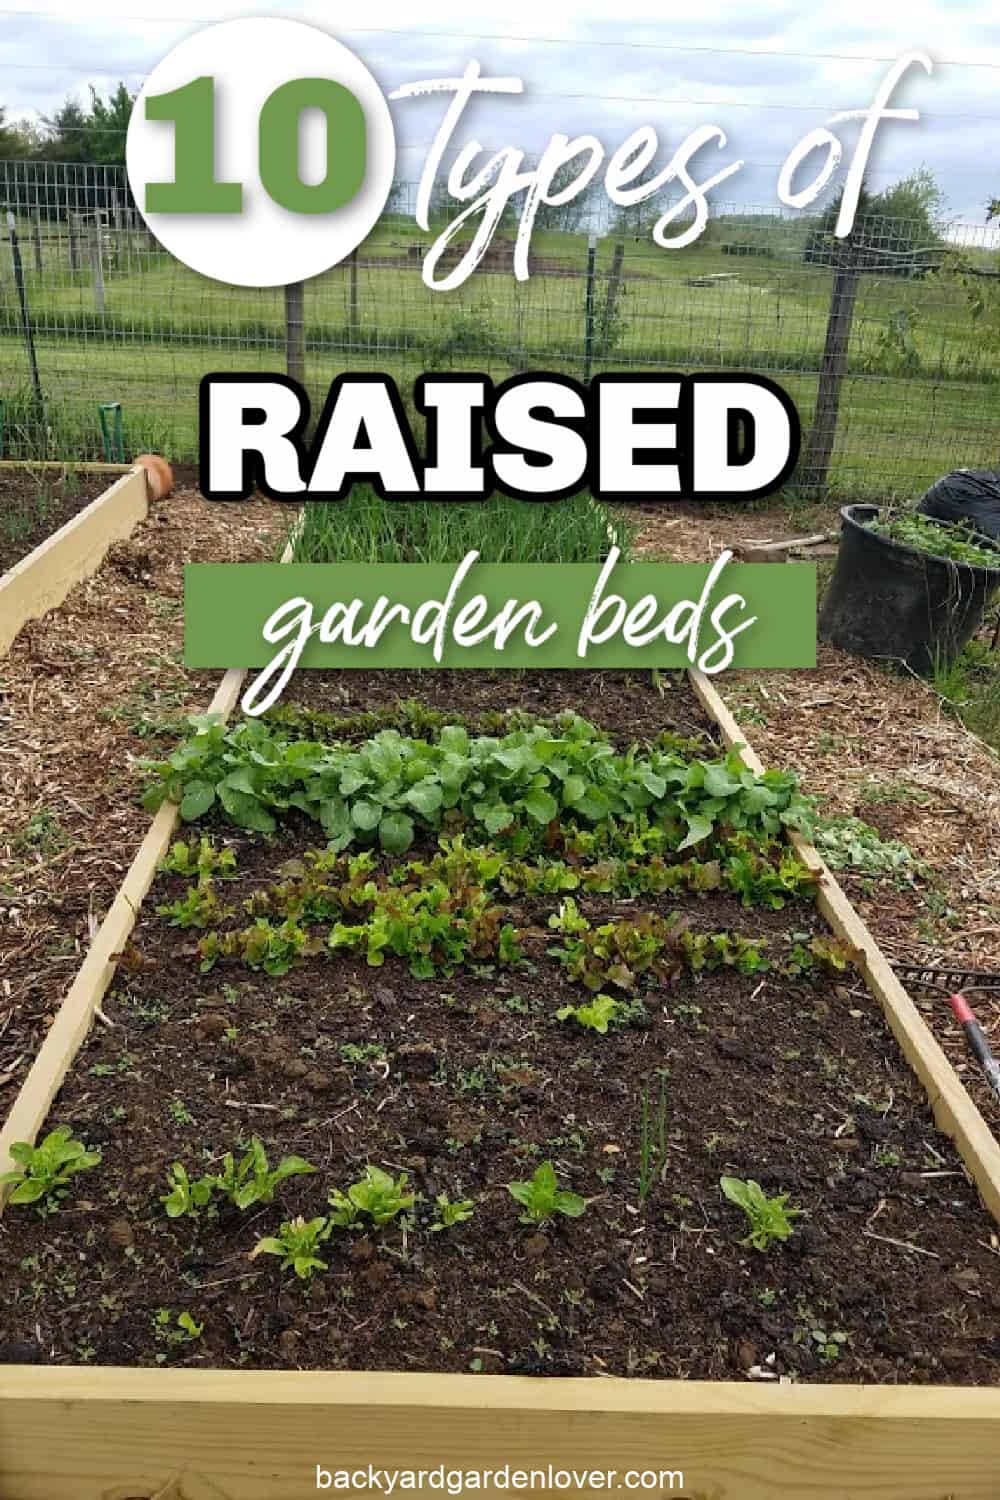 10 types of raised garden beds - Pinterest image